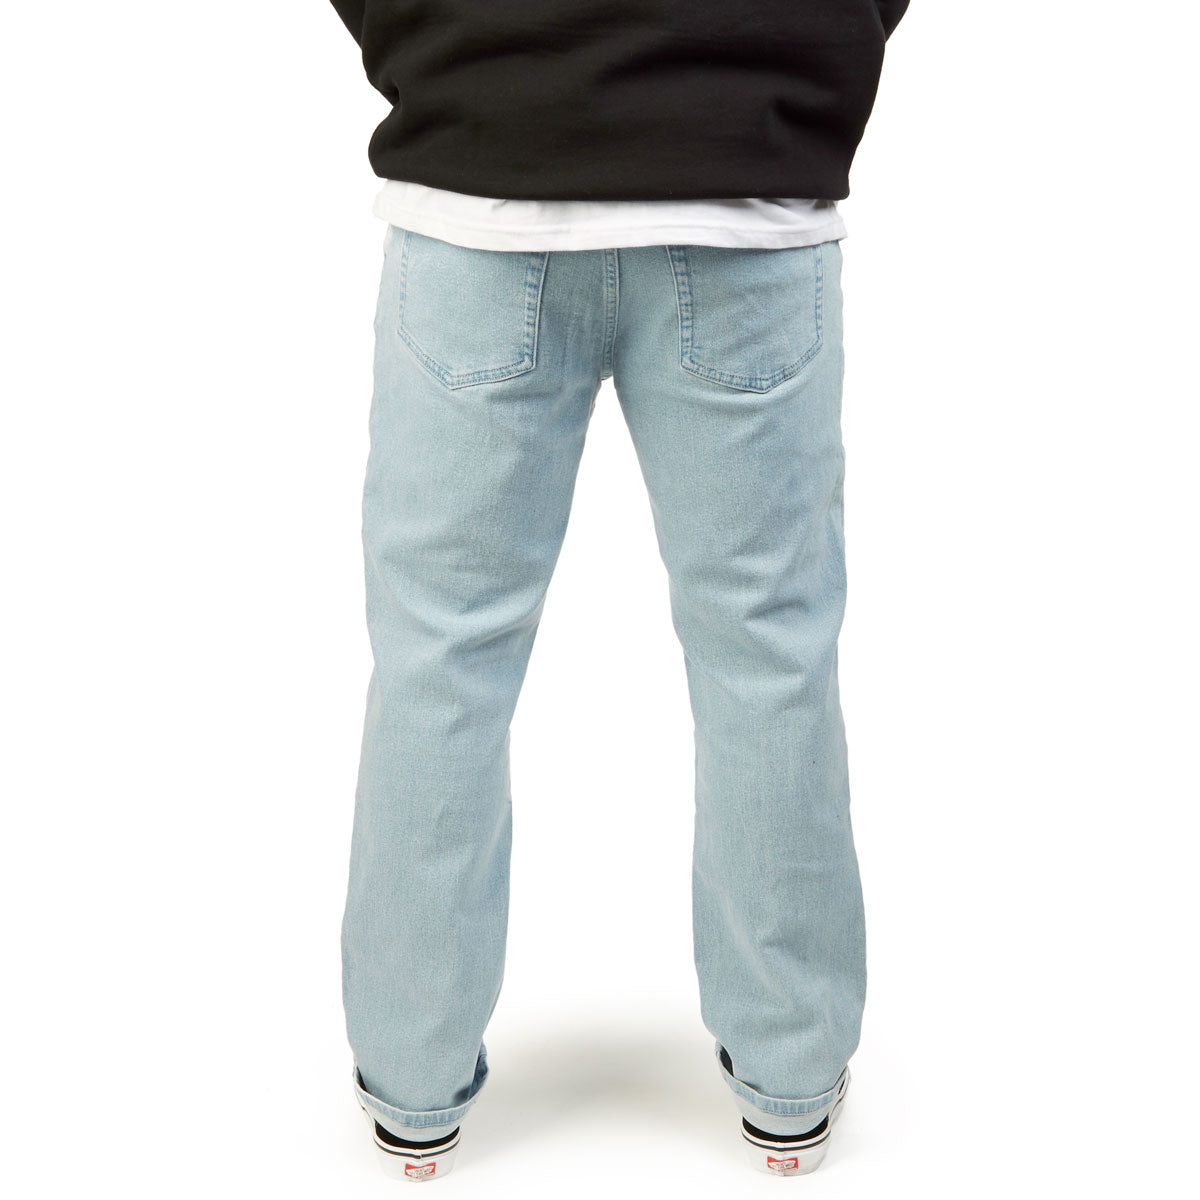 CCS 12oz Stretch Straight Denim Jeans - 12oz Bleach Wash image 4